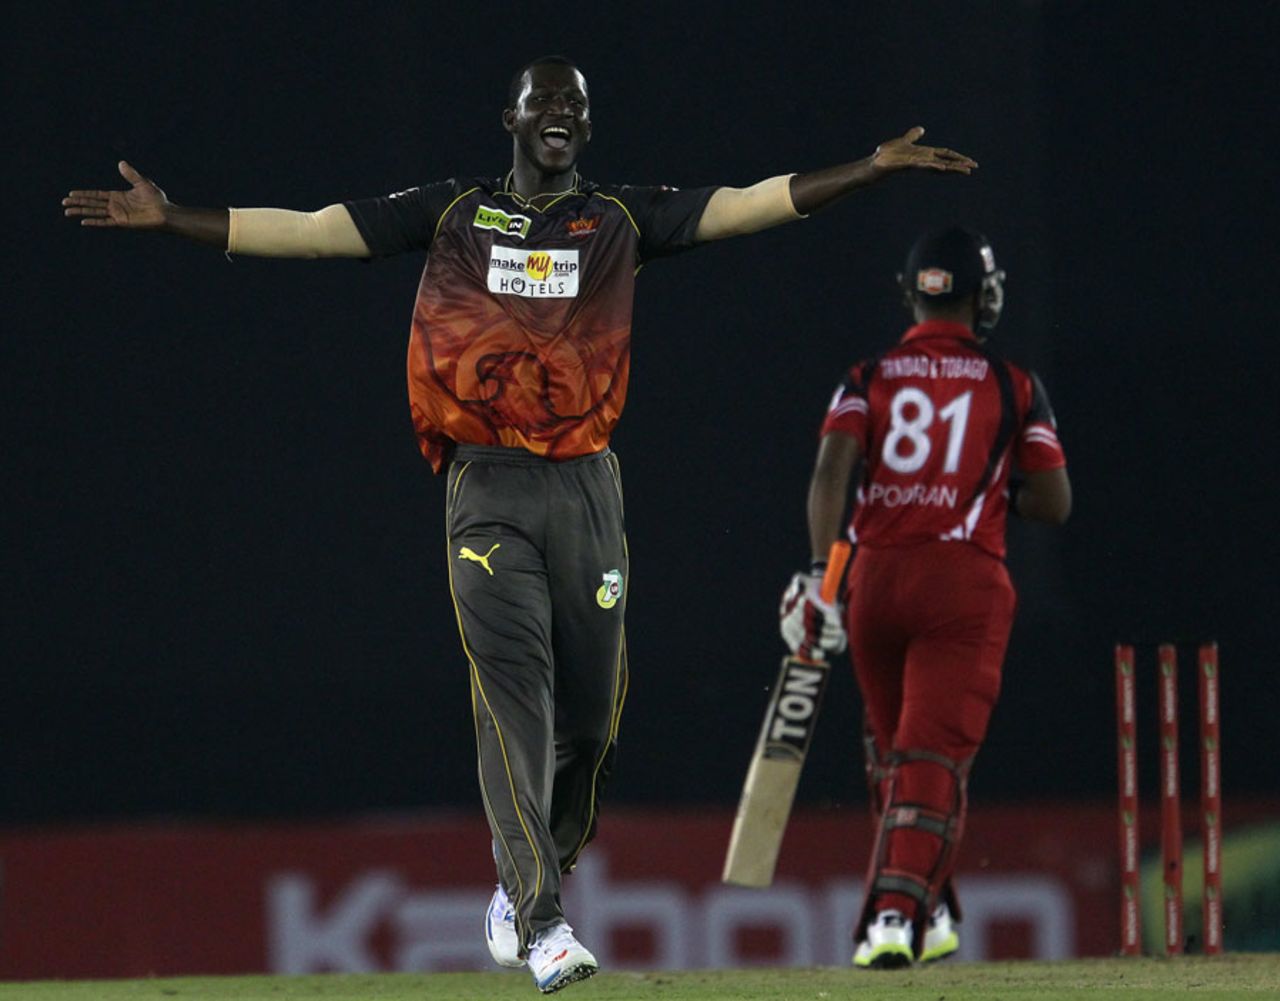 Darren Sammy celebrates a wicket, Trinidad & Tobago v Sunrisers Hyderabad, Group B, Champions League 2013, Mohali, September 24, 2013